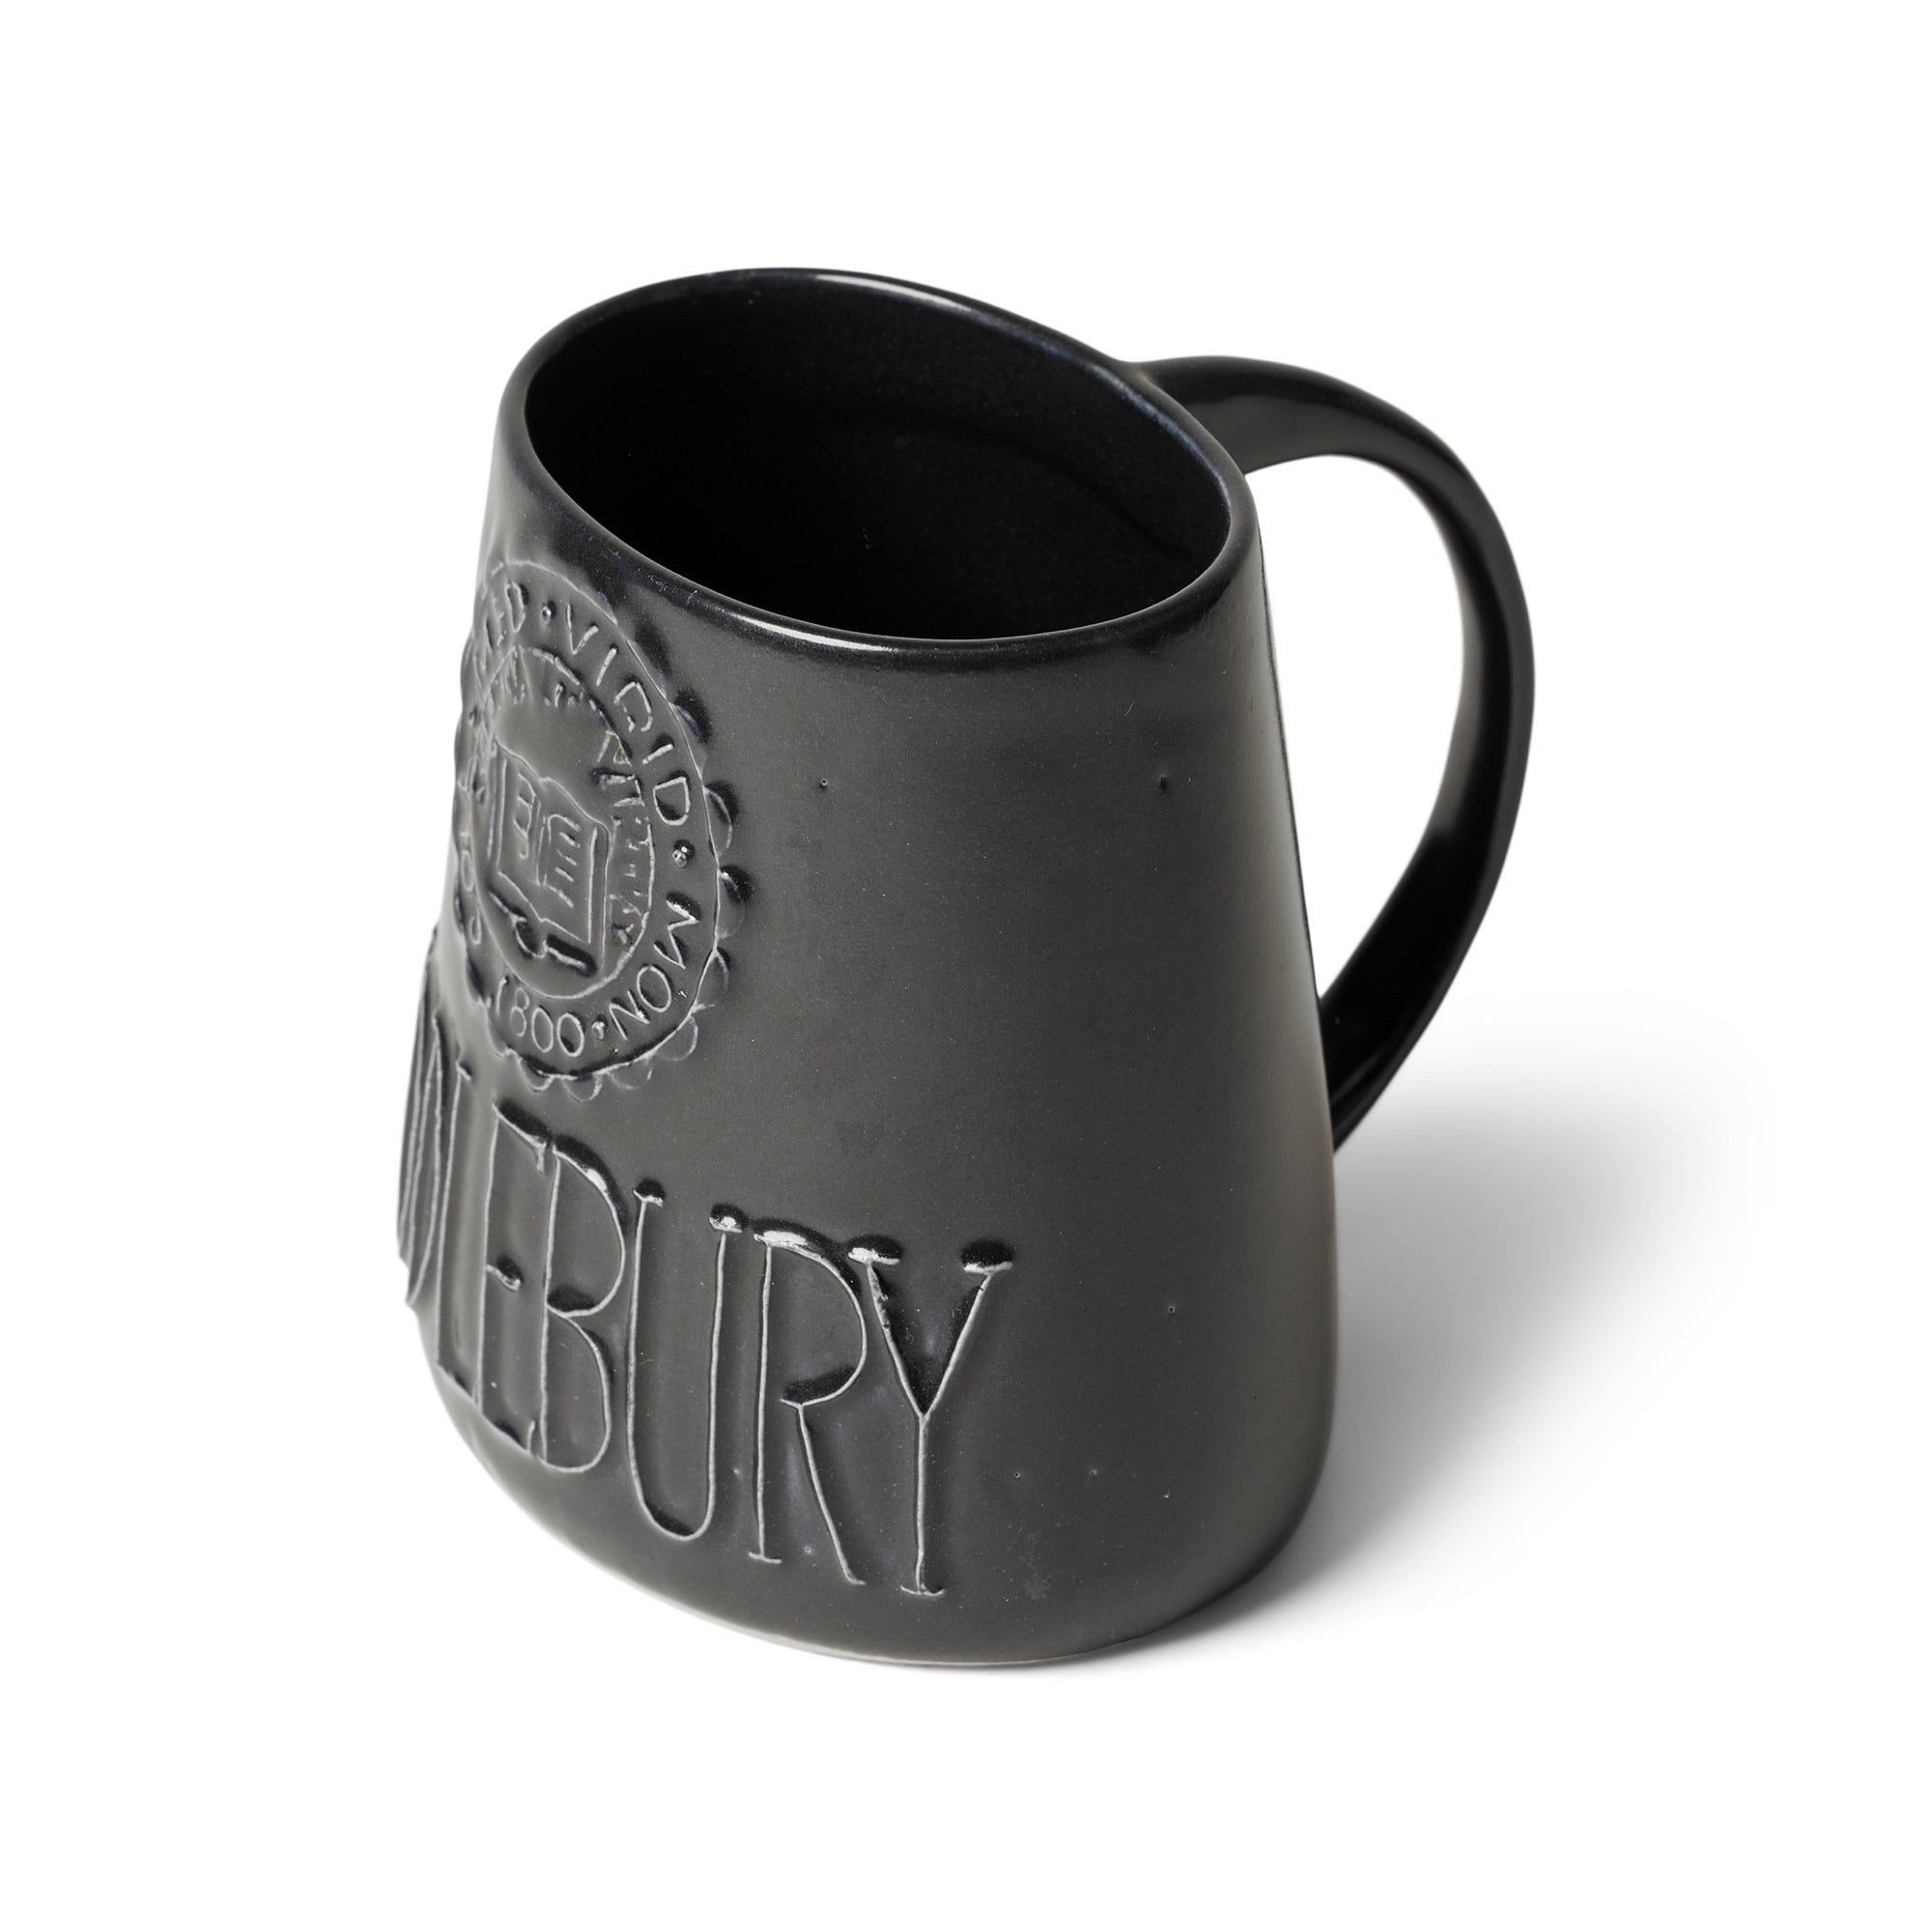 Middlebury College Mug by David Gil for Bennington Potters